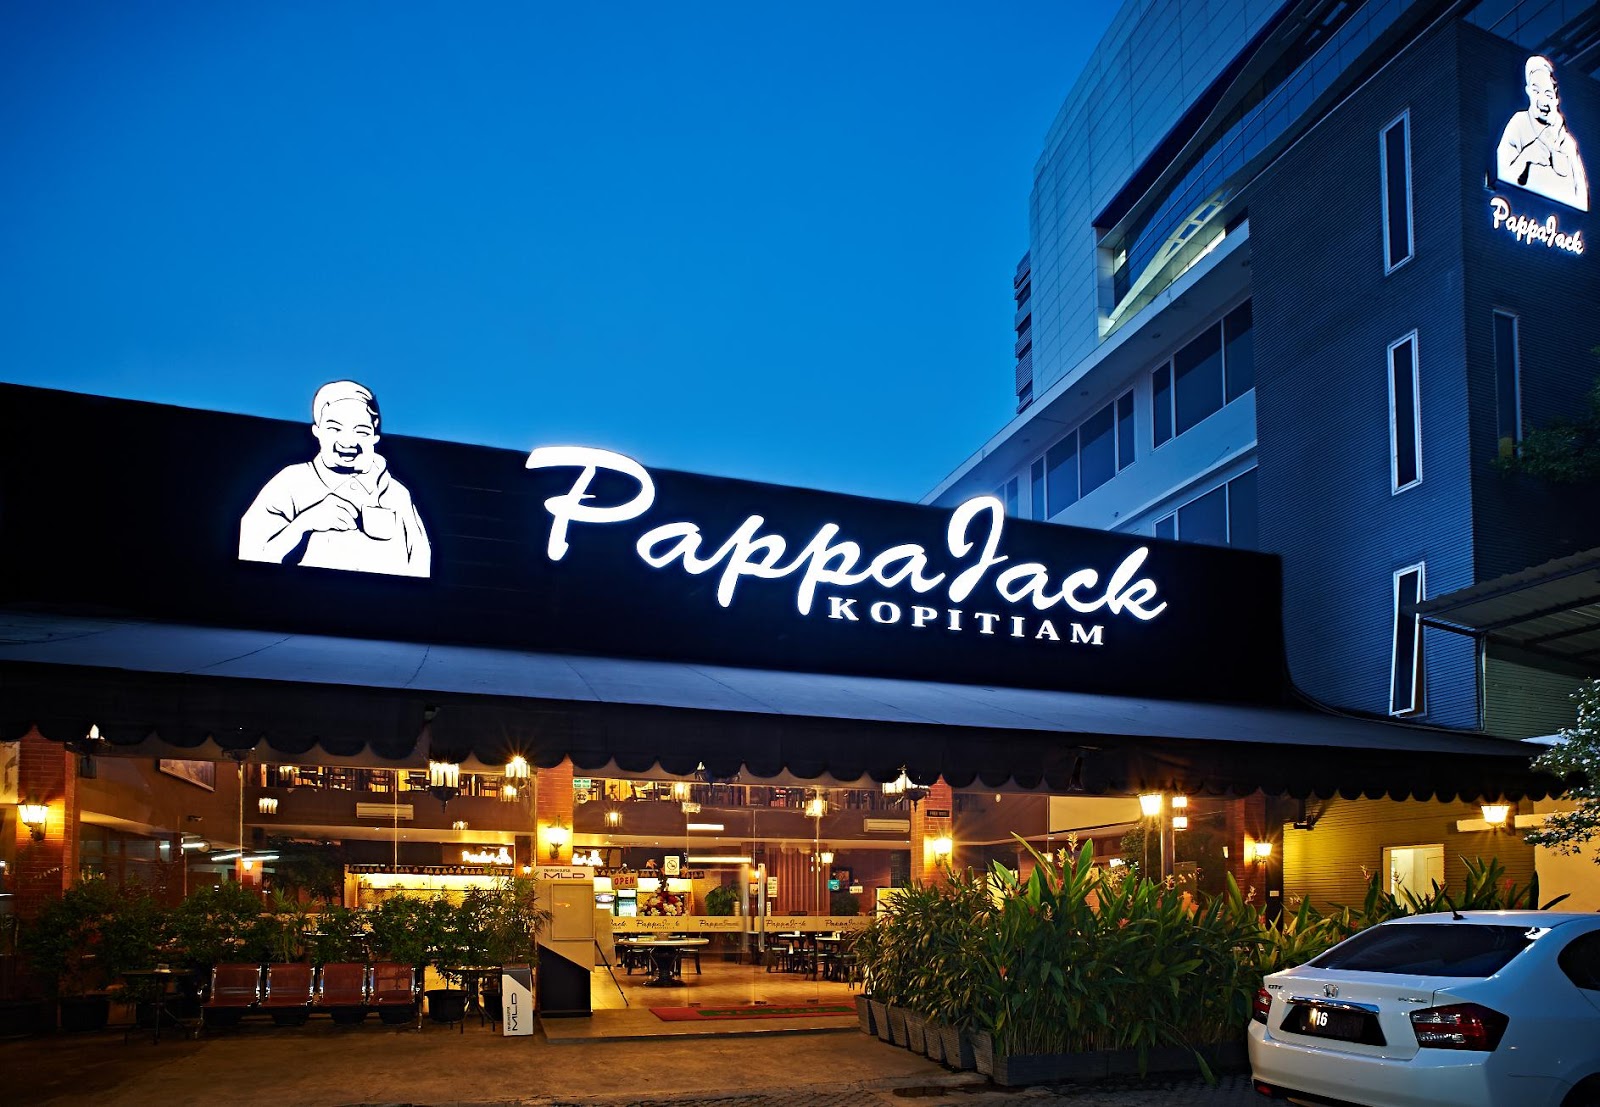 Photo of PappaJack Kopitiam Kedoya in Freeport City, New York, United States - 4 Picture of Restaurant, Food, Point of interest, Establishment